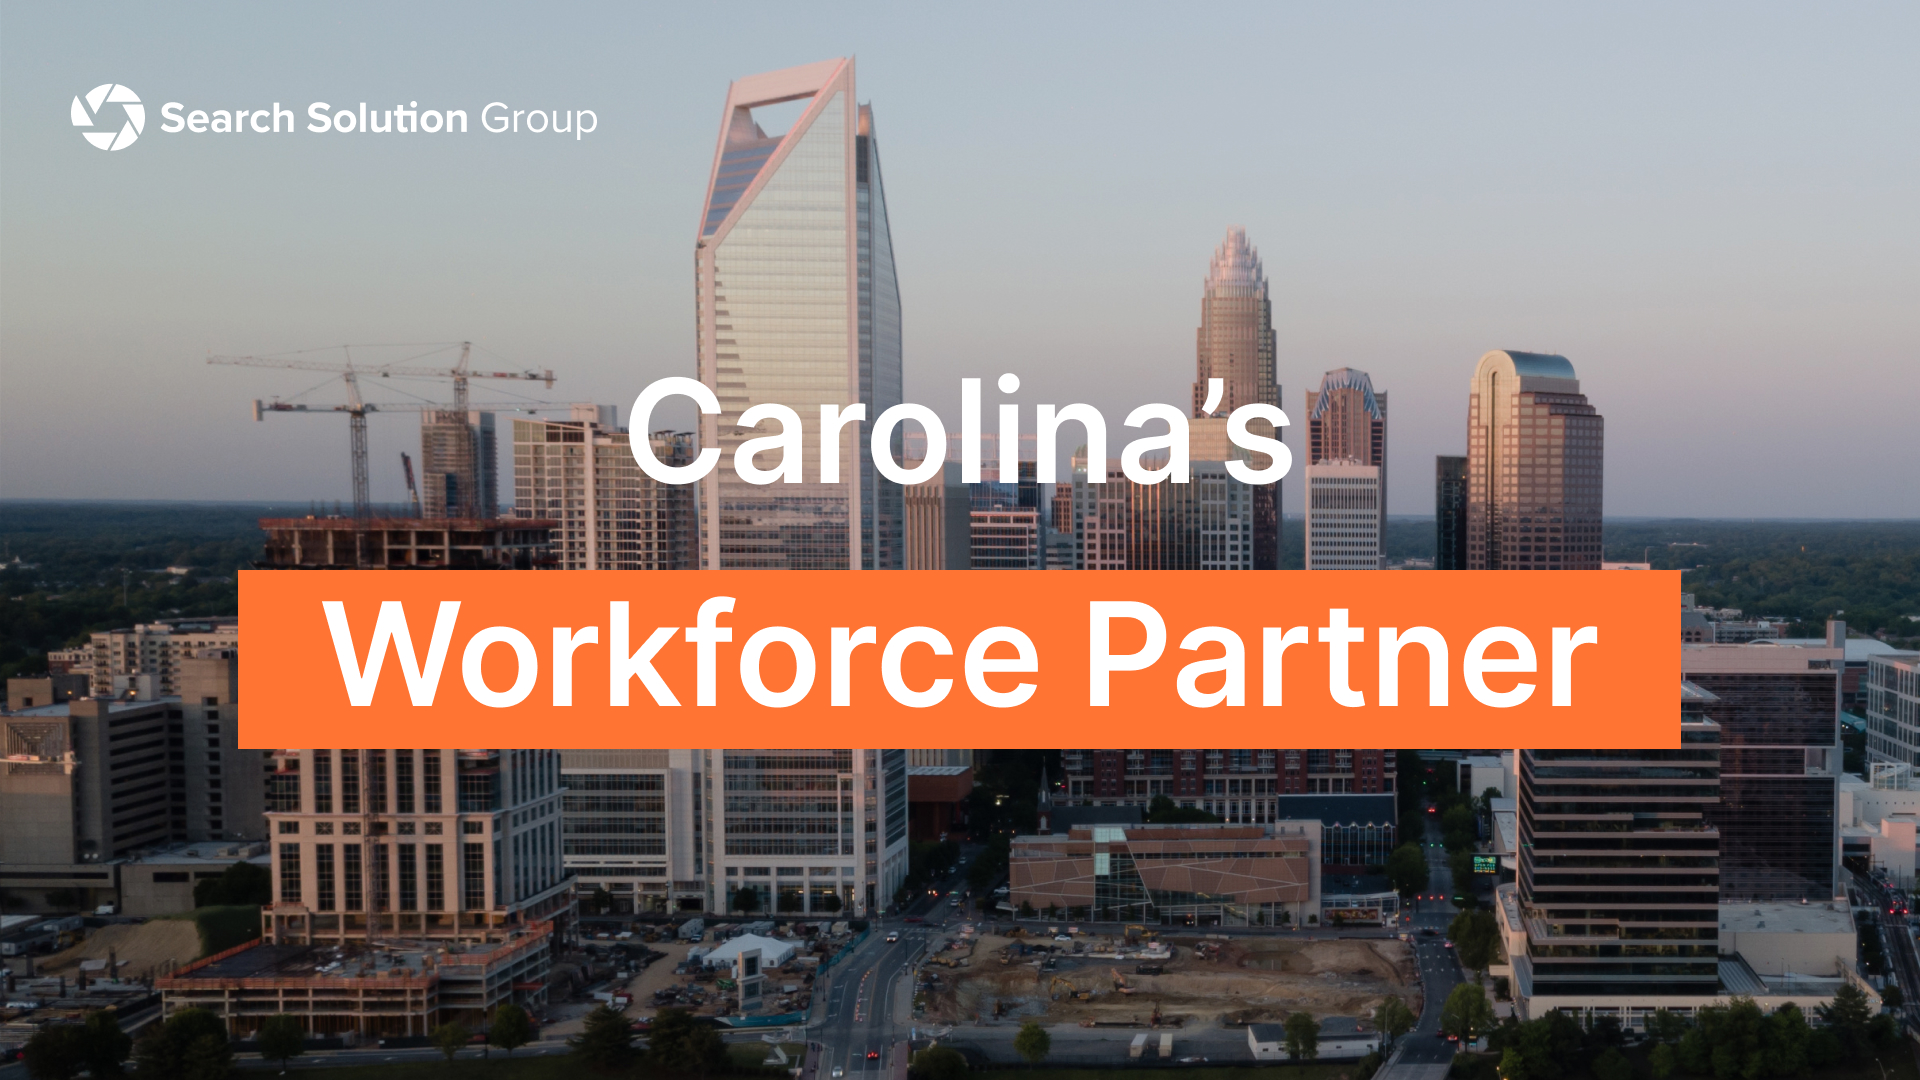 Carolina’s Workforce Partner – Search Solution Group